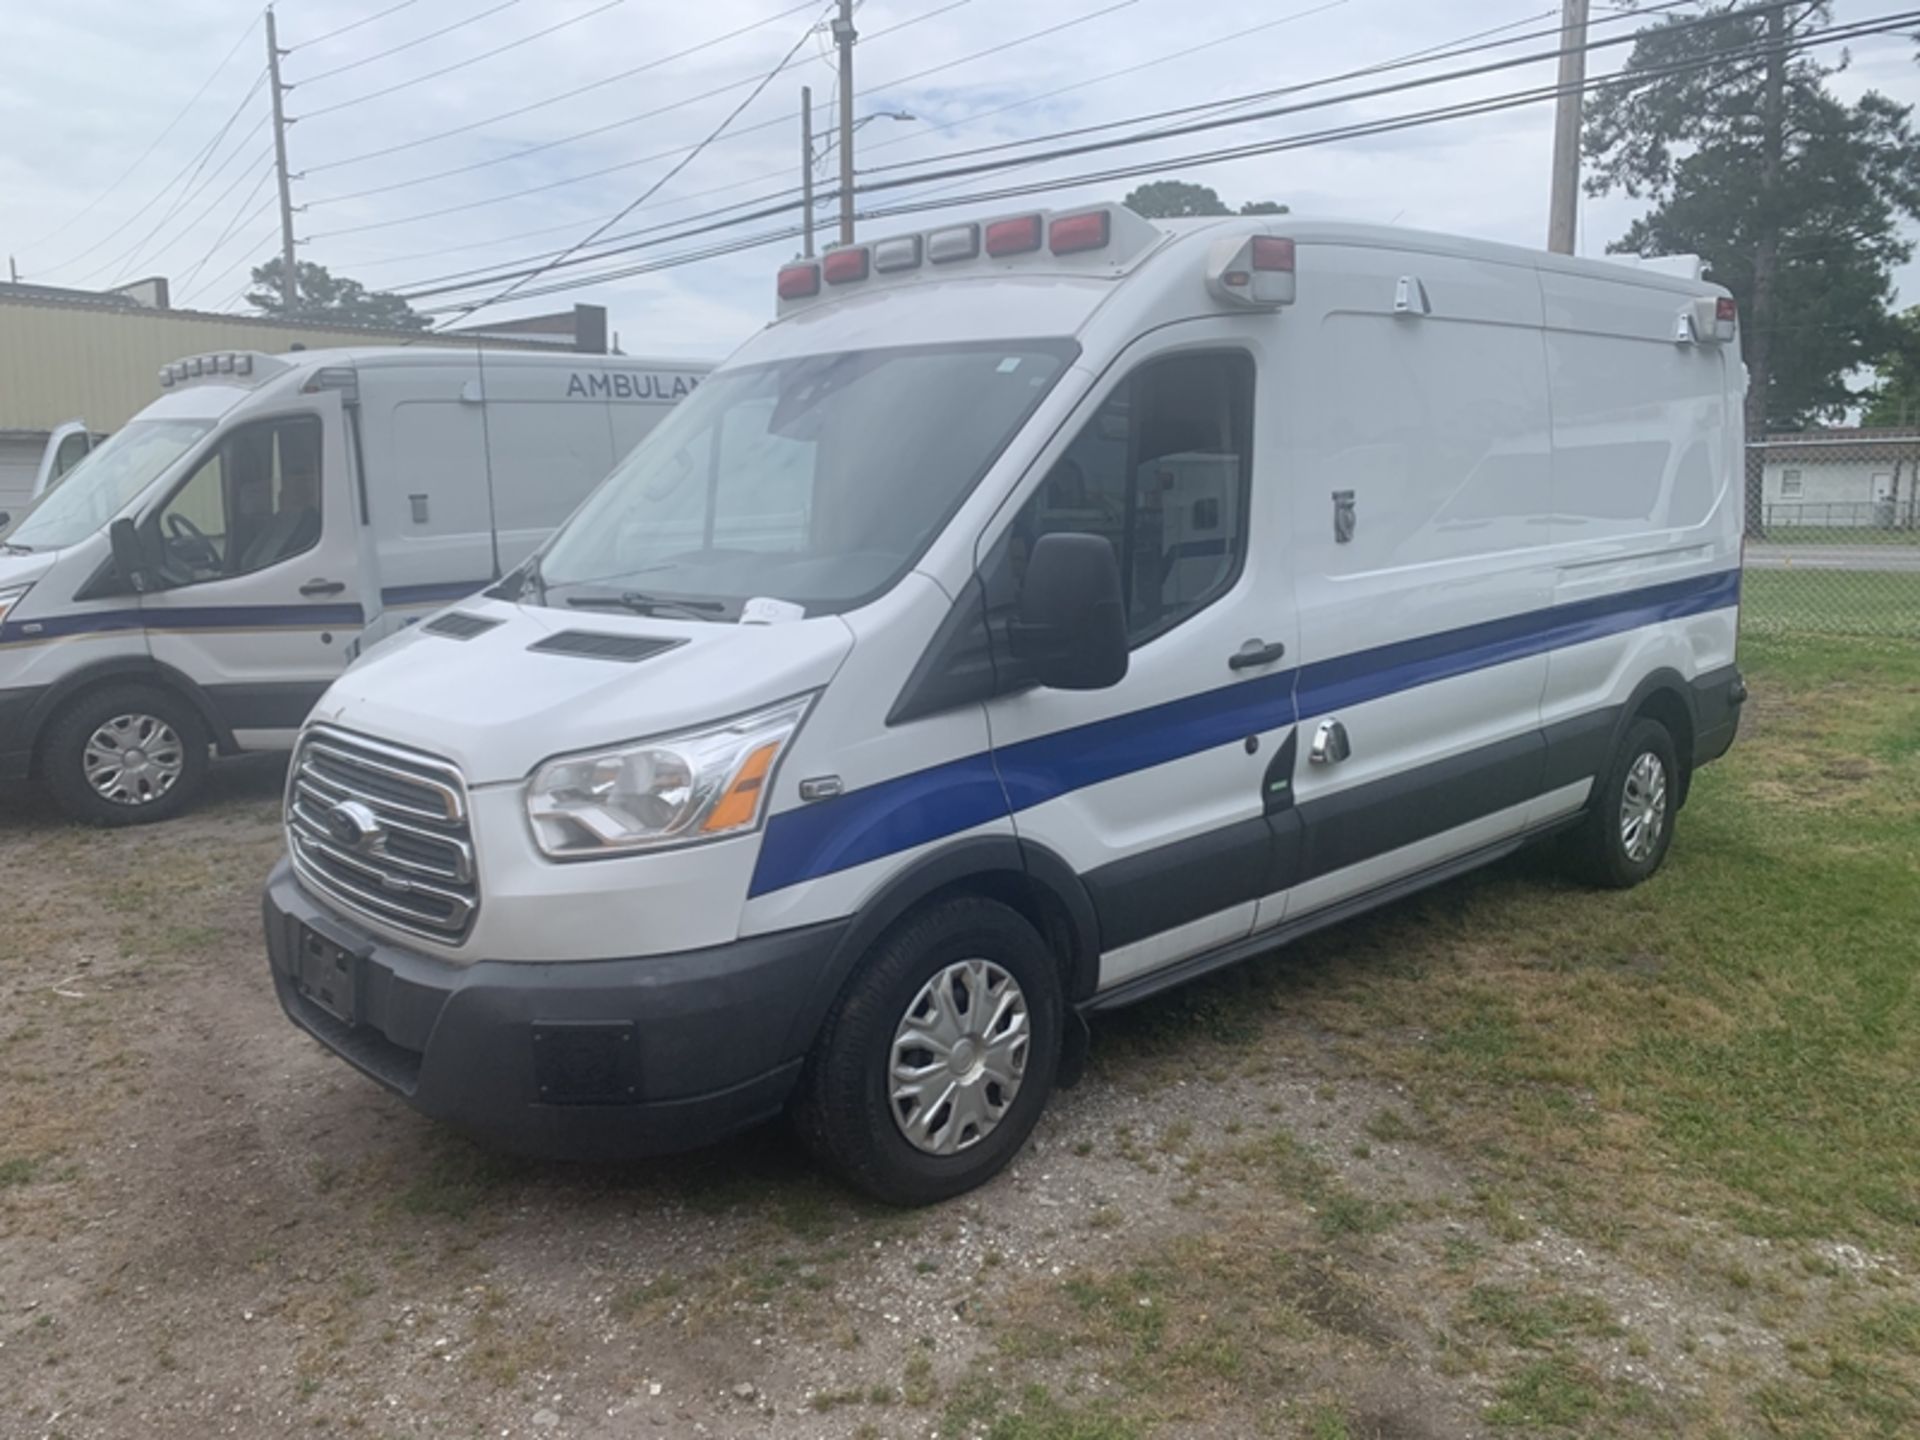 2018 FORD Transit 350 Sprinter Van, Type II Ambulance, 3.2L dsl - 194,131 miles - VIN: